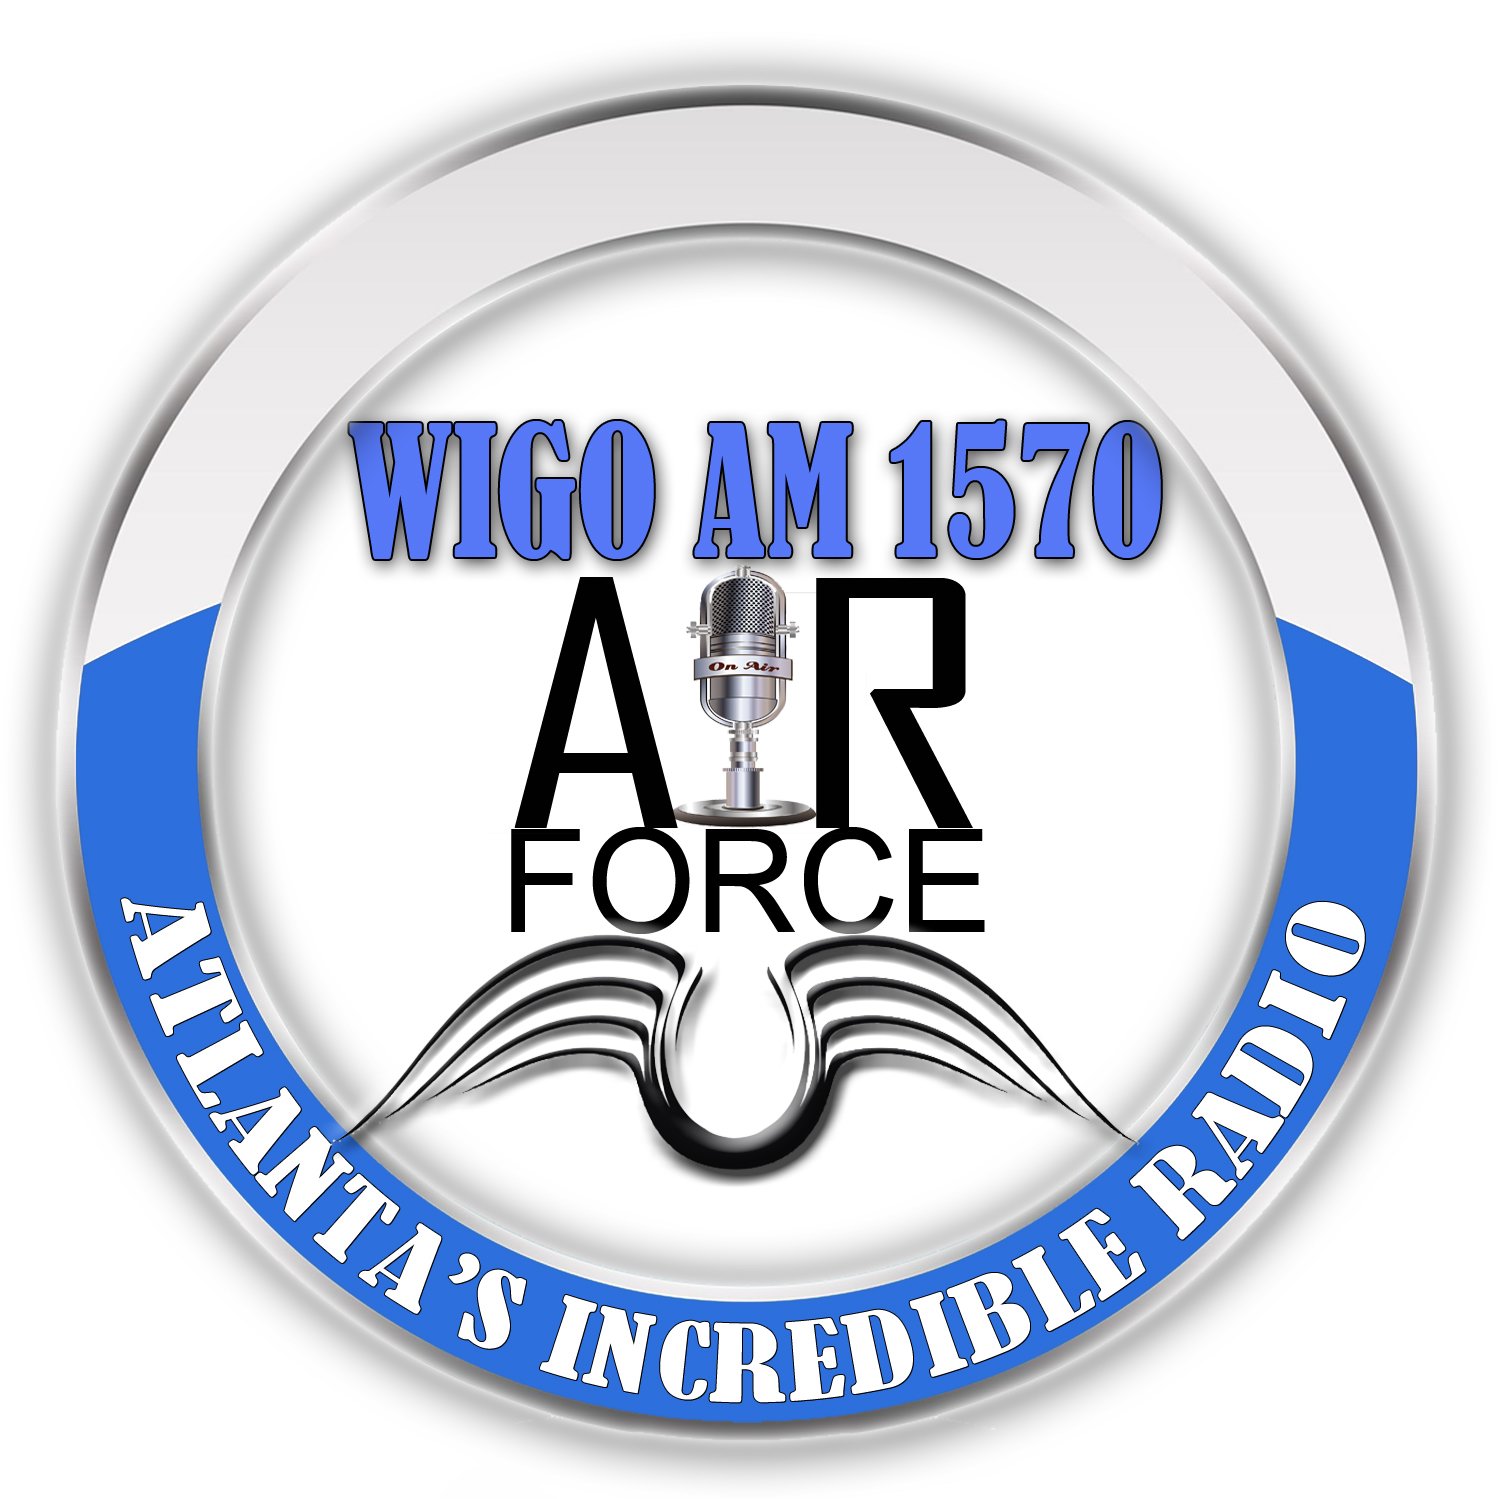  WIGO AM 1570 AIR FORCE ATLANTA'S INCREDIBLE RADIO ON AIR